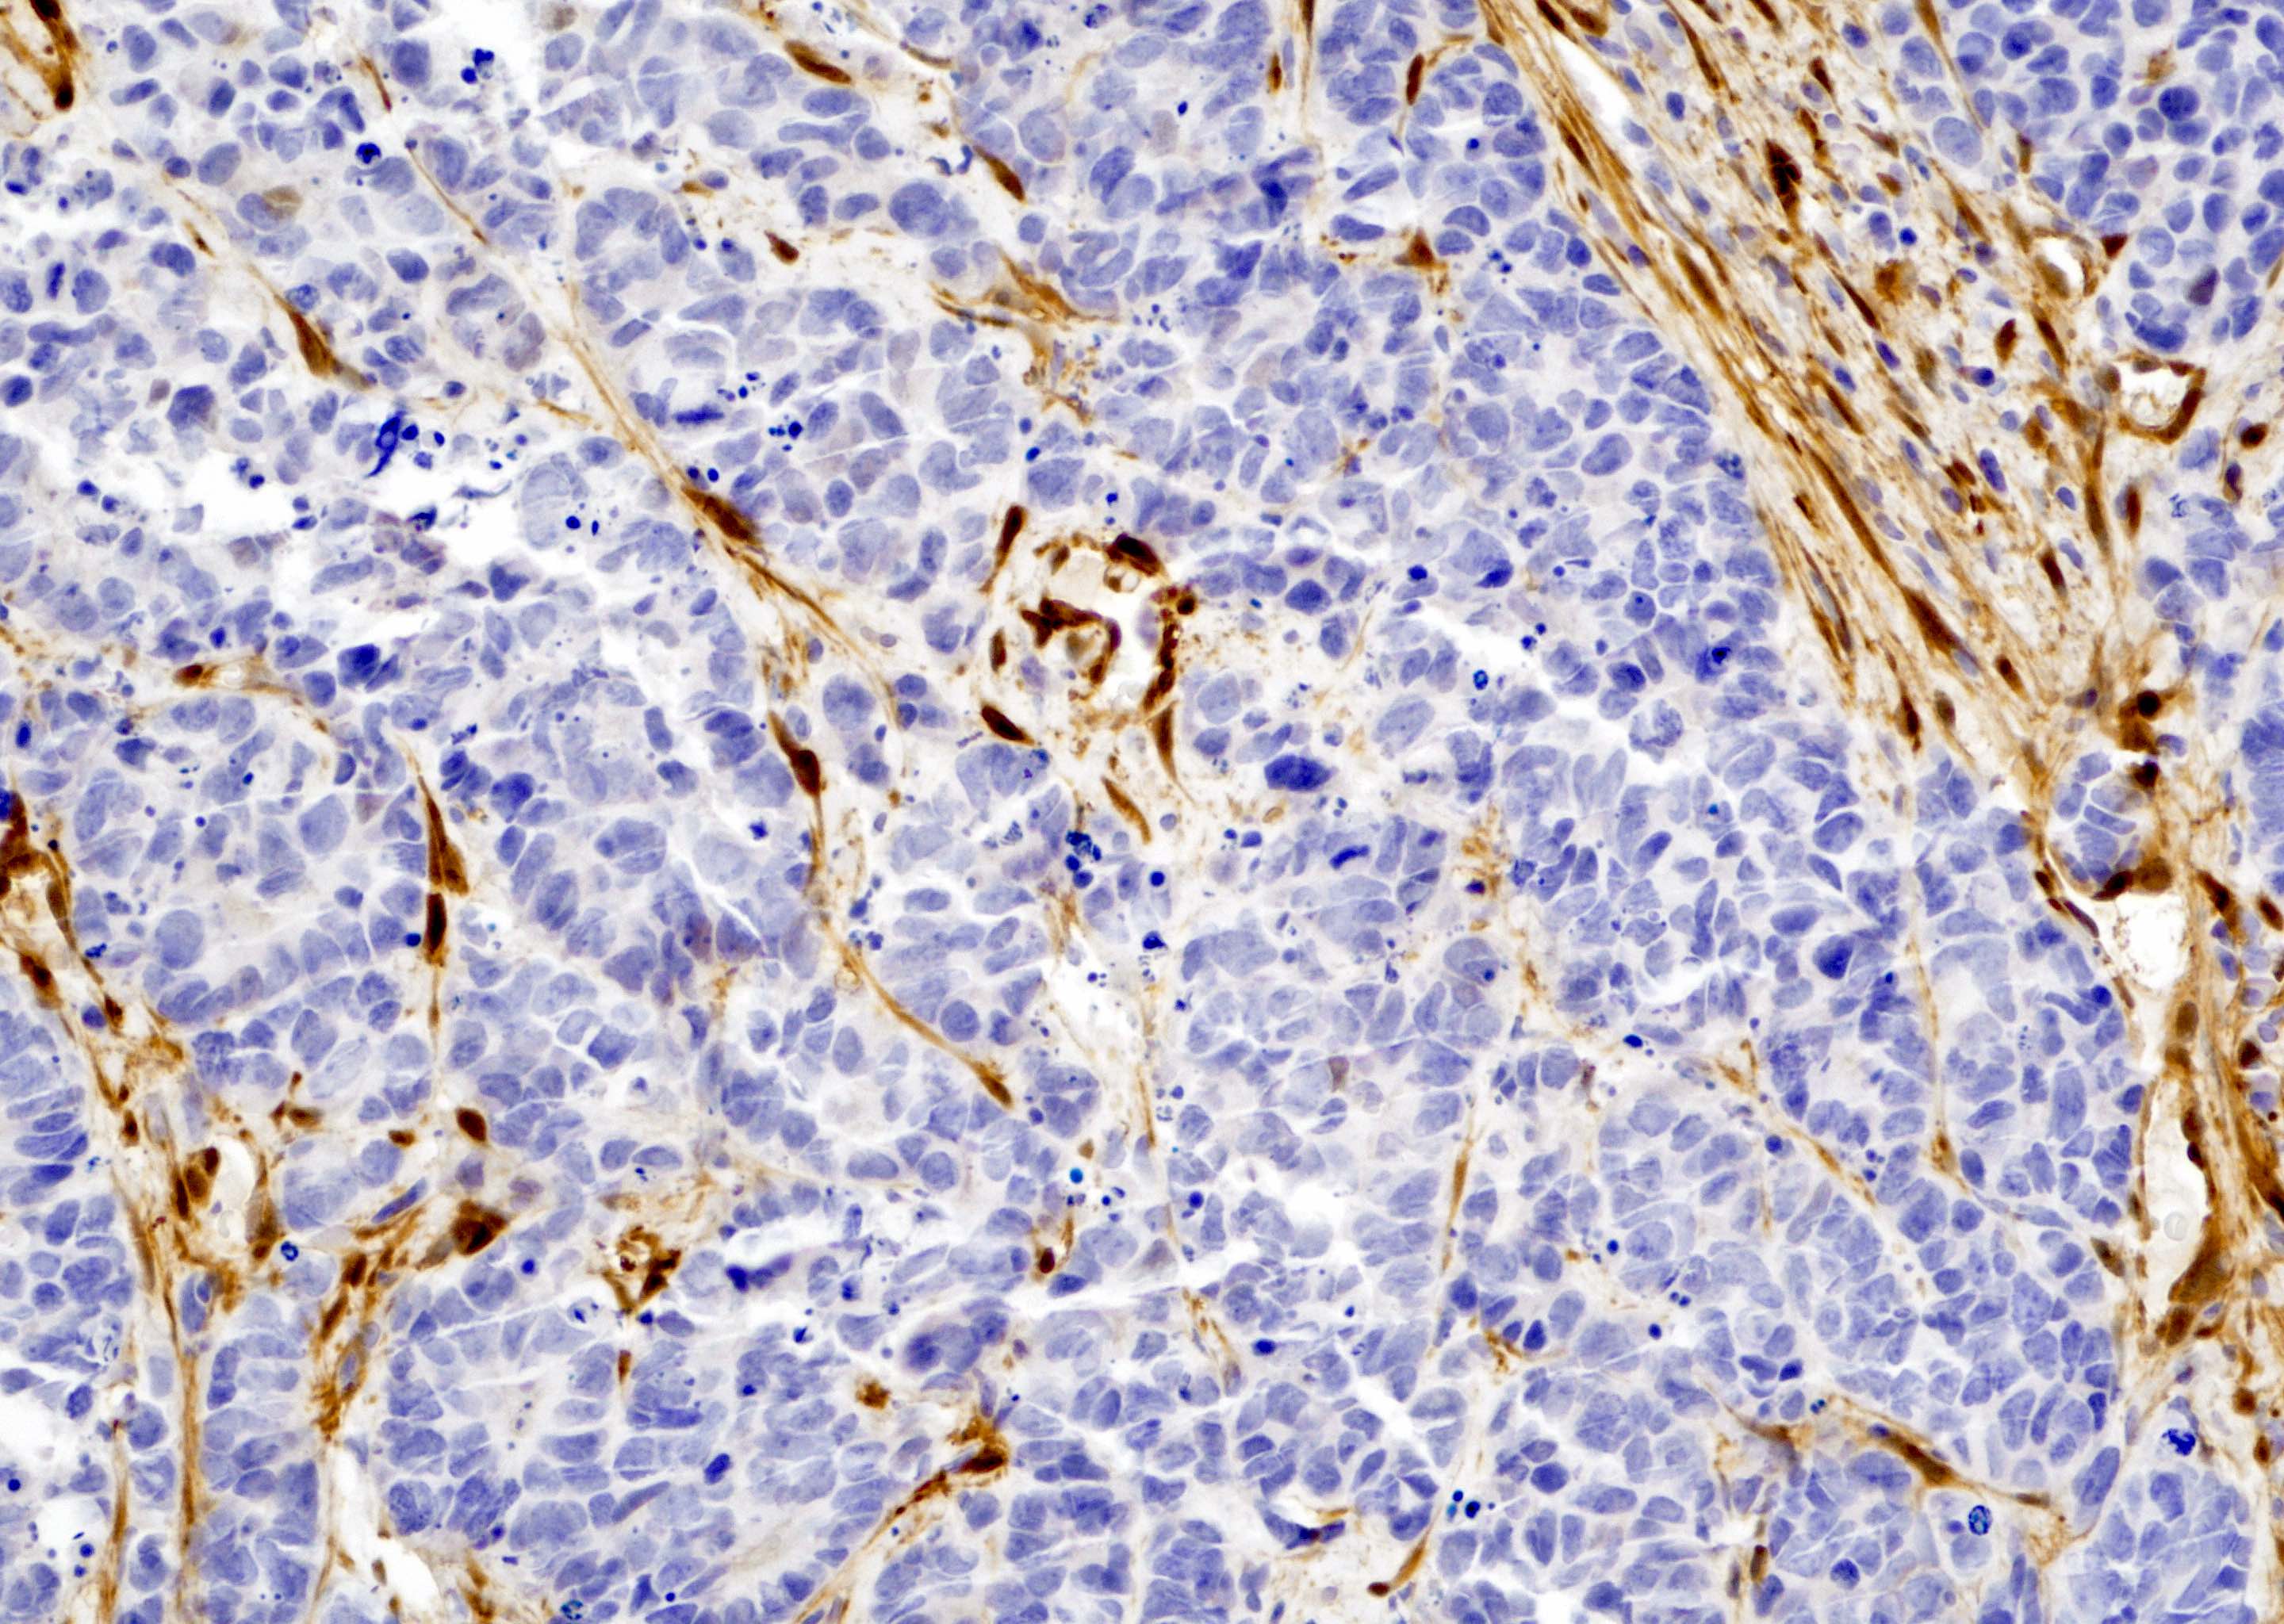 YAP1 in neuroendocrine carcinoma